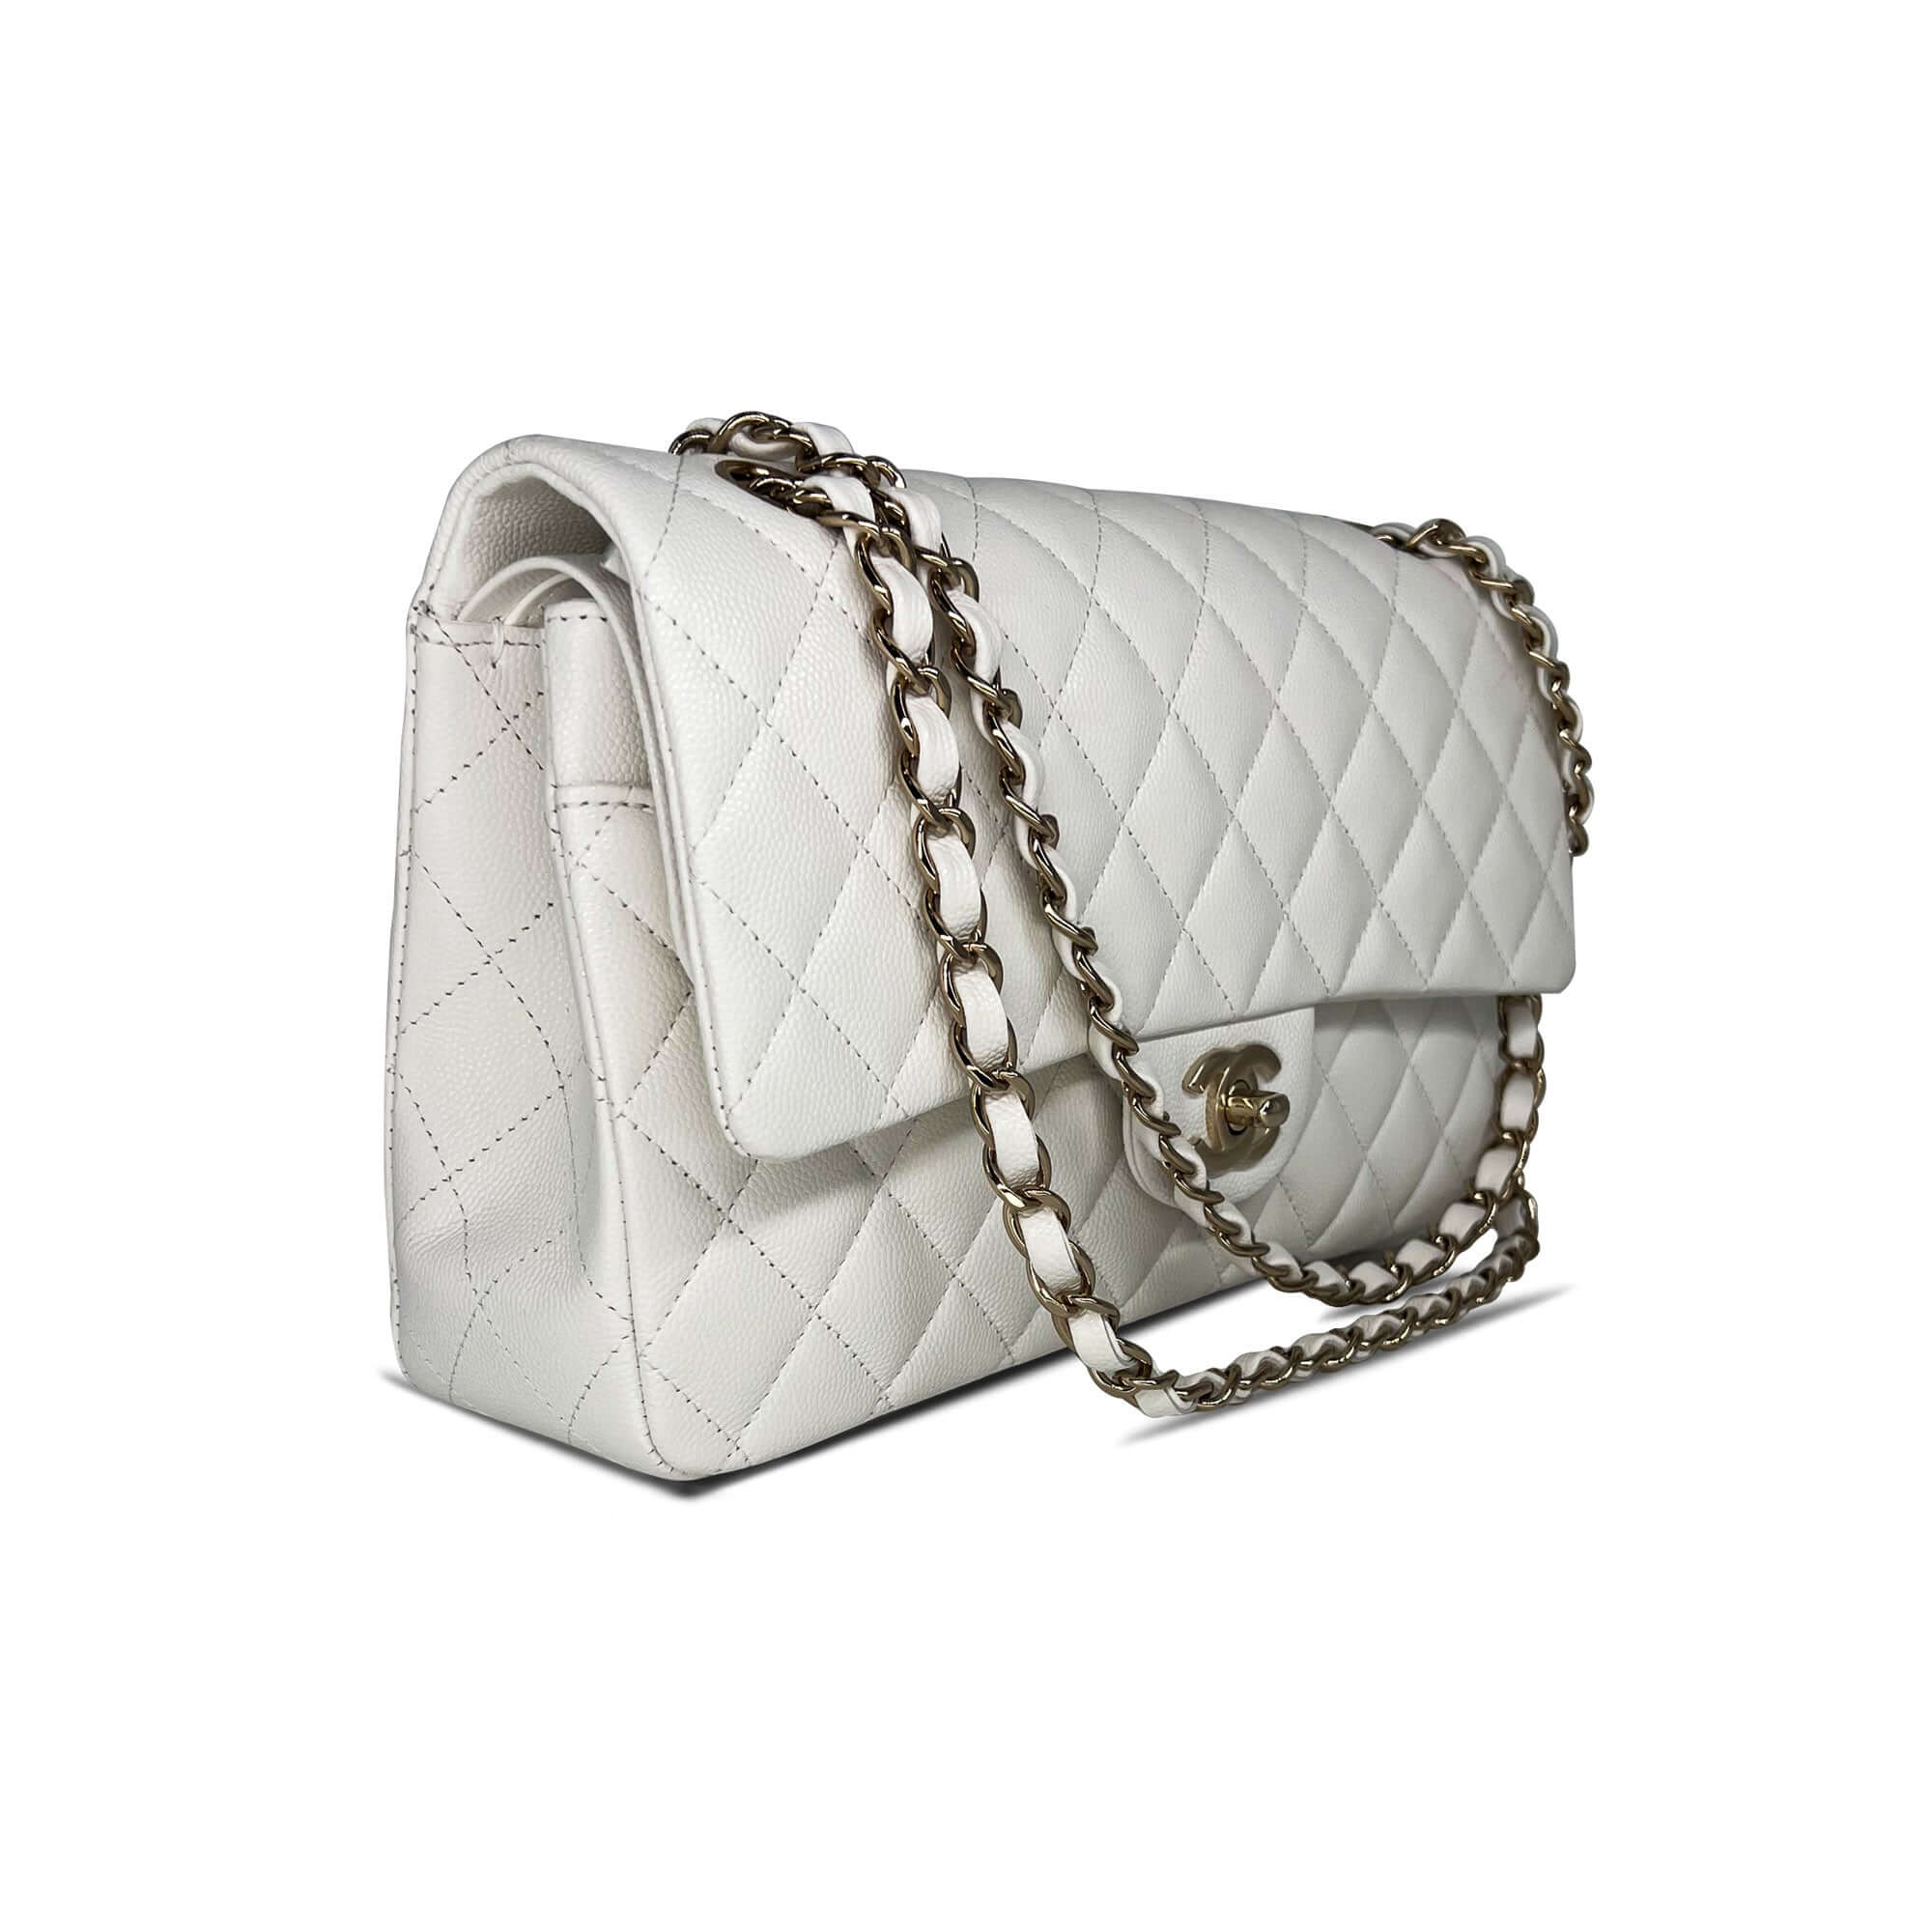 Chanel optic white caviar leather double flap closure bag